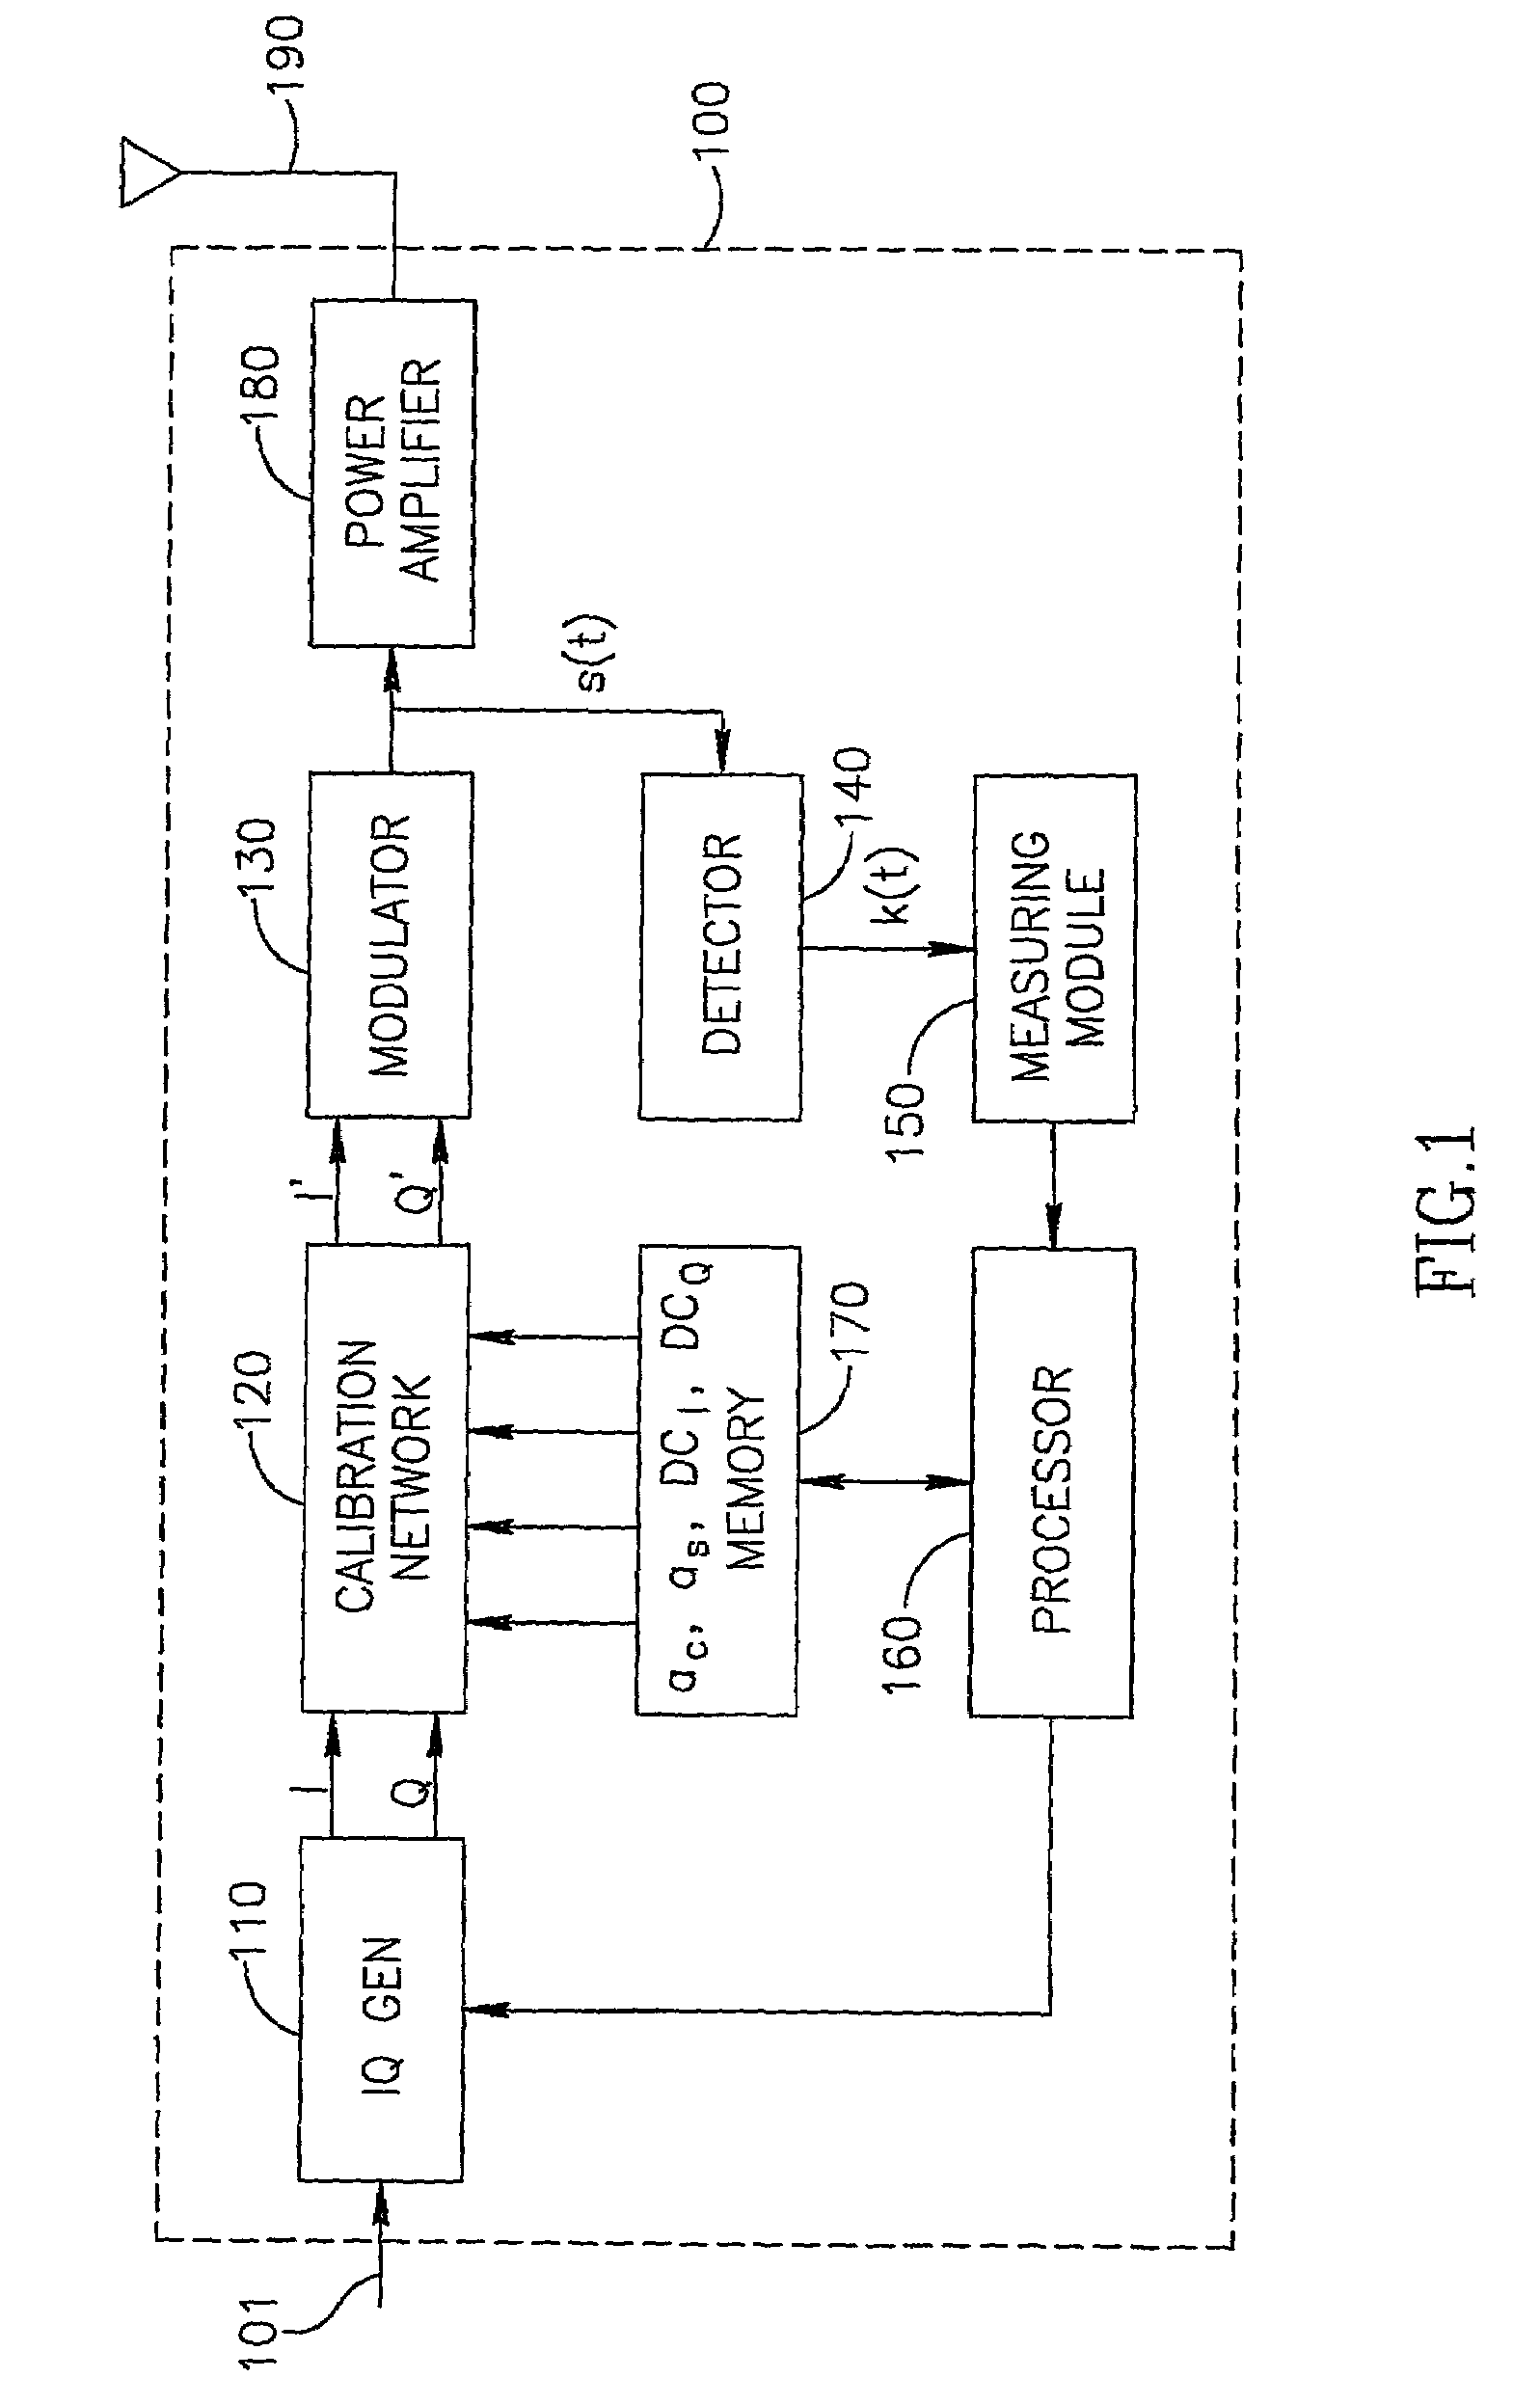 Method and apparatus of compensating imbalance of a modulator